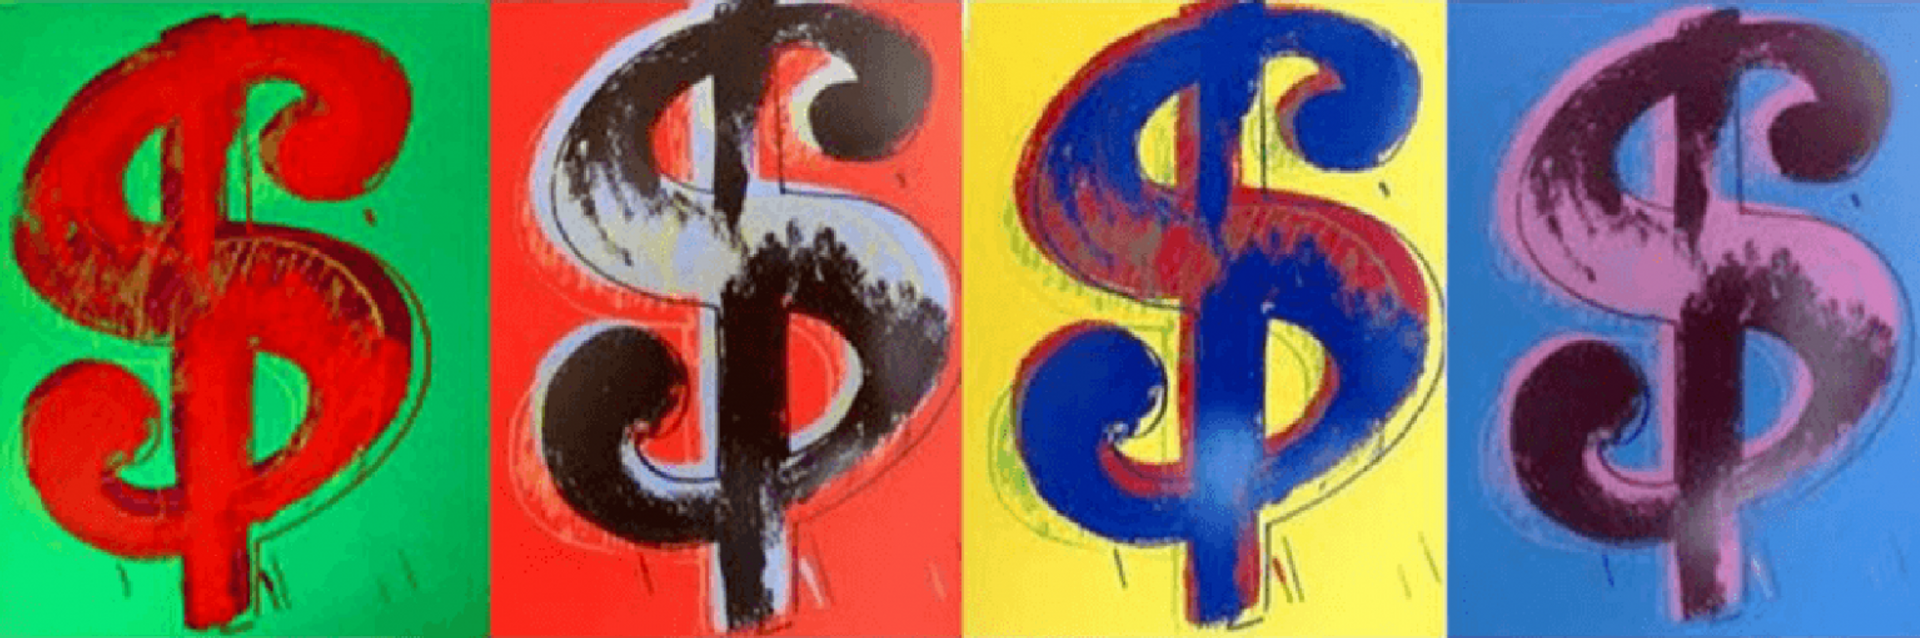 Dollar Signs by Andy Warhol